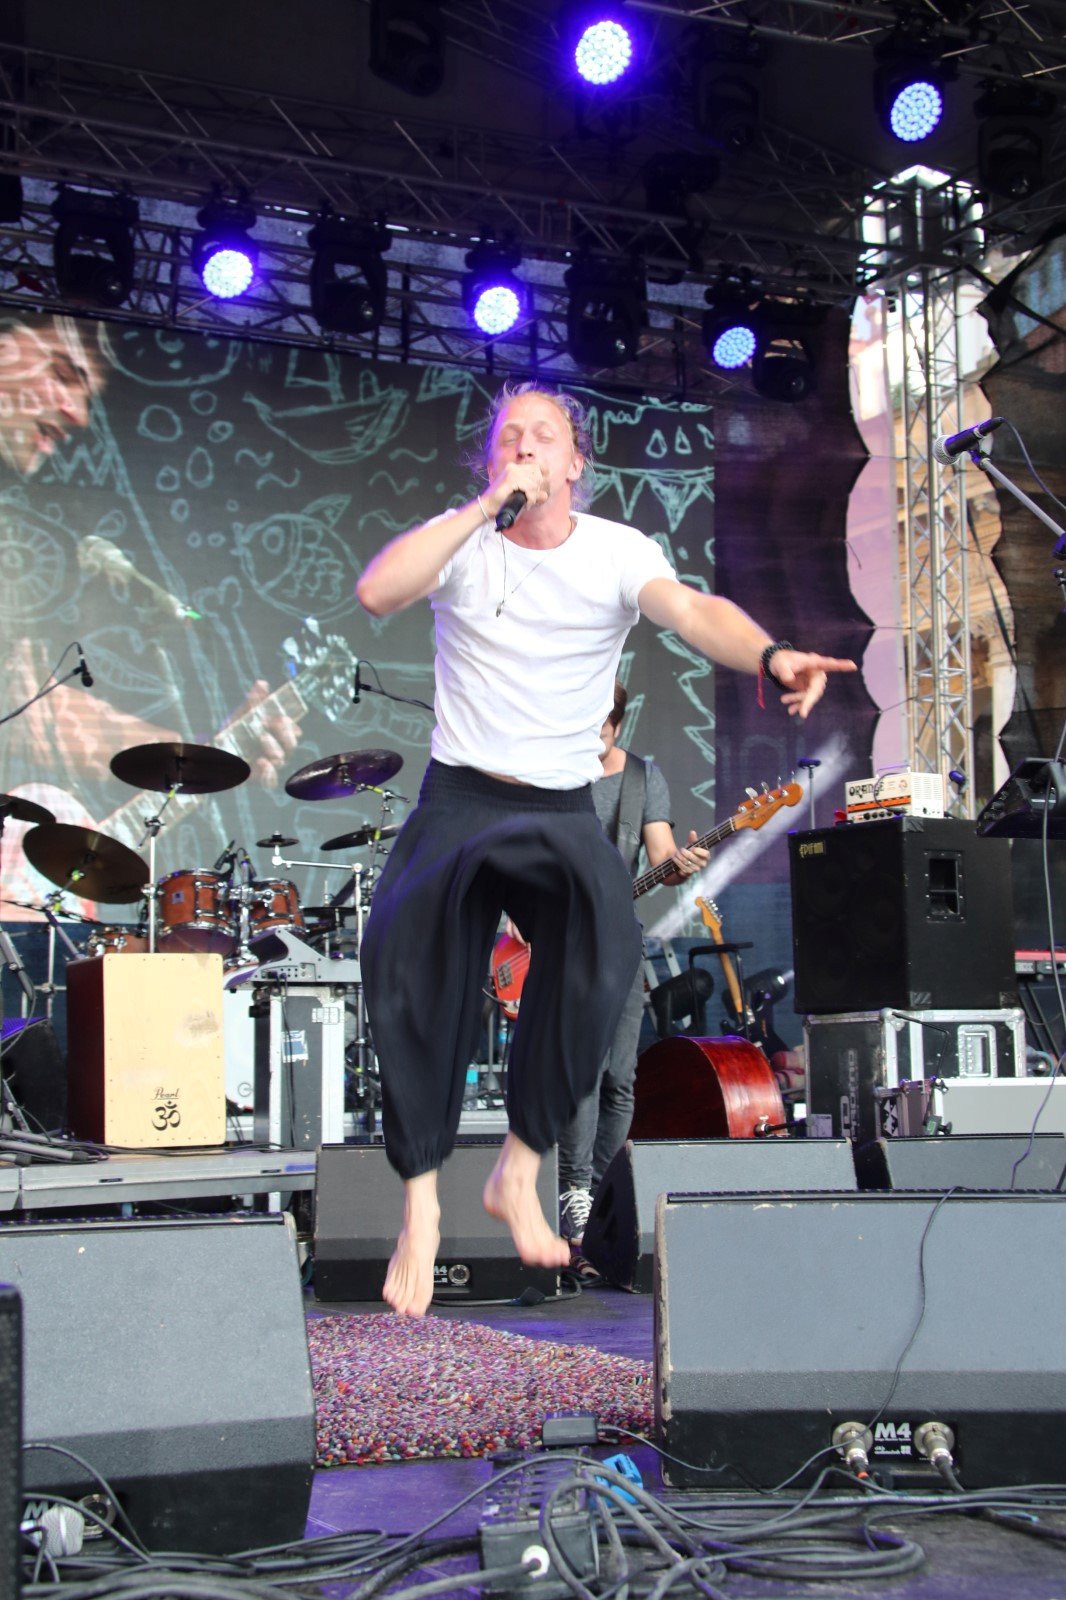 Tomáš Klus zazpíval na koncertě v Karlových Varech na festivalu.